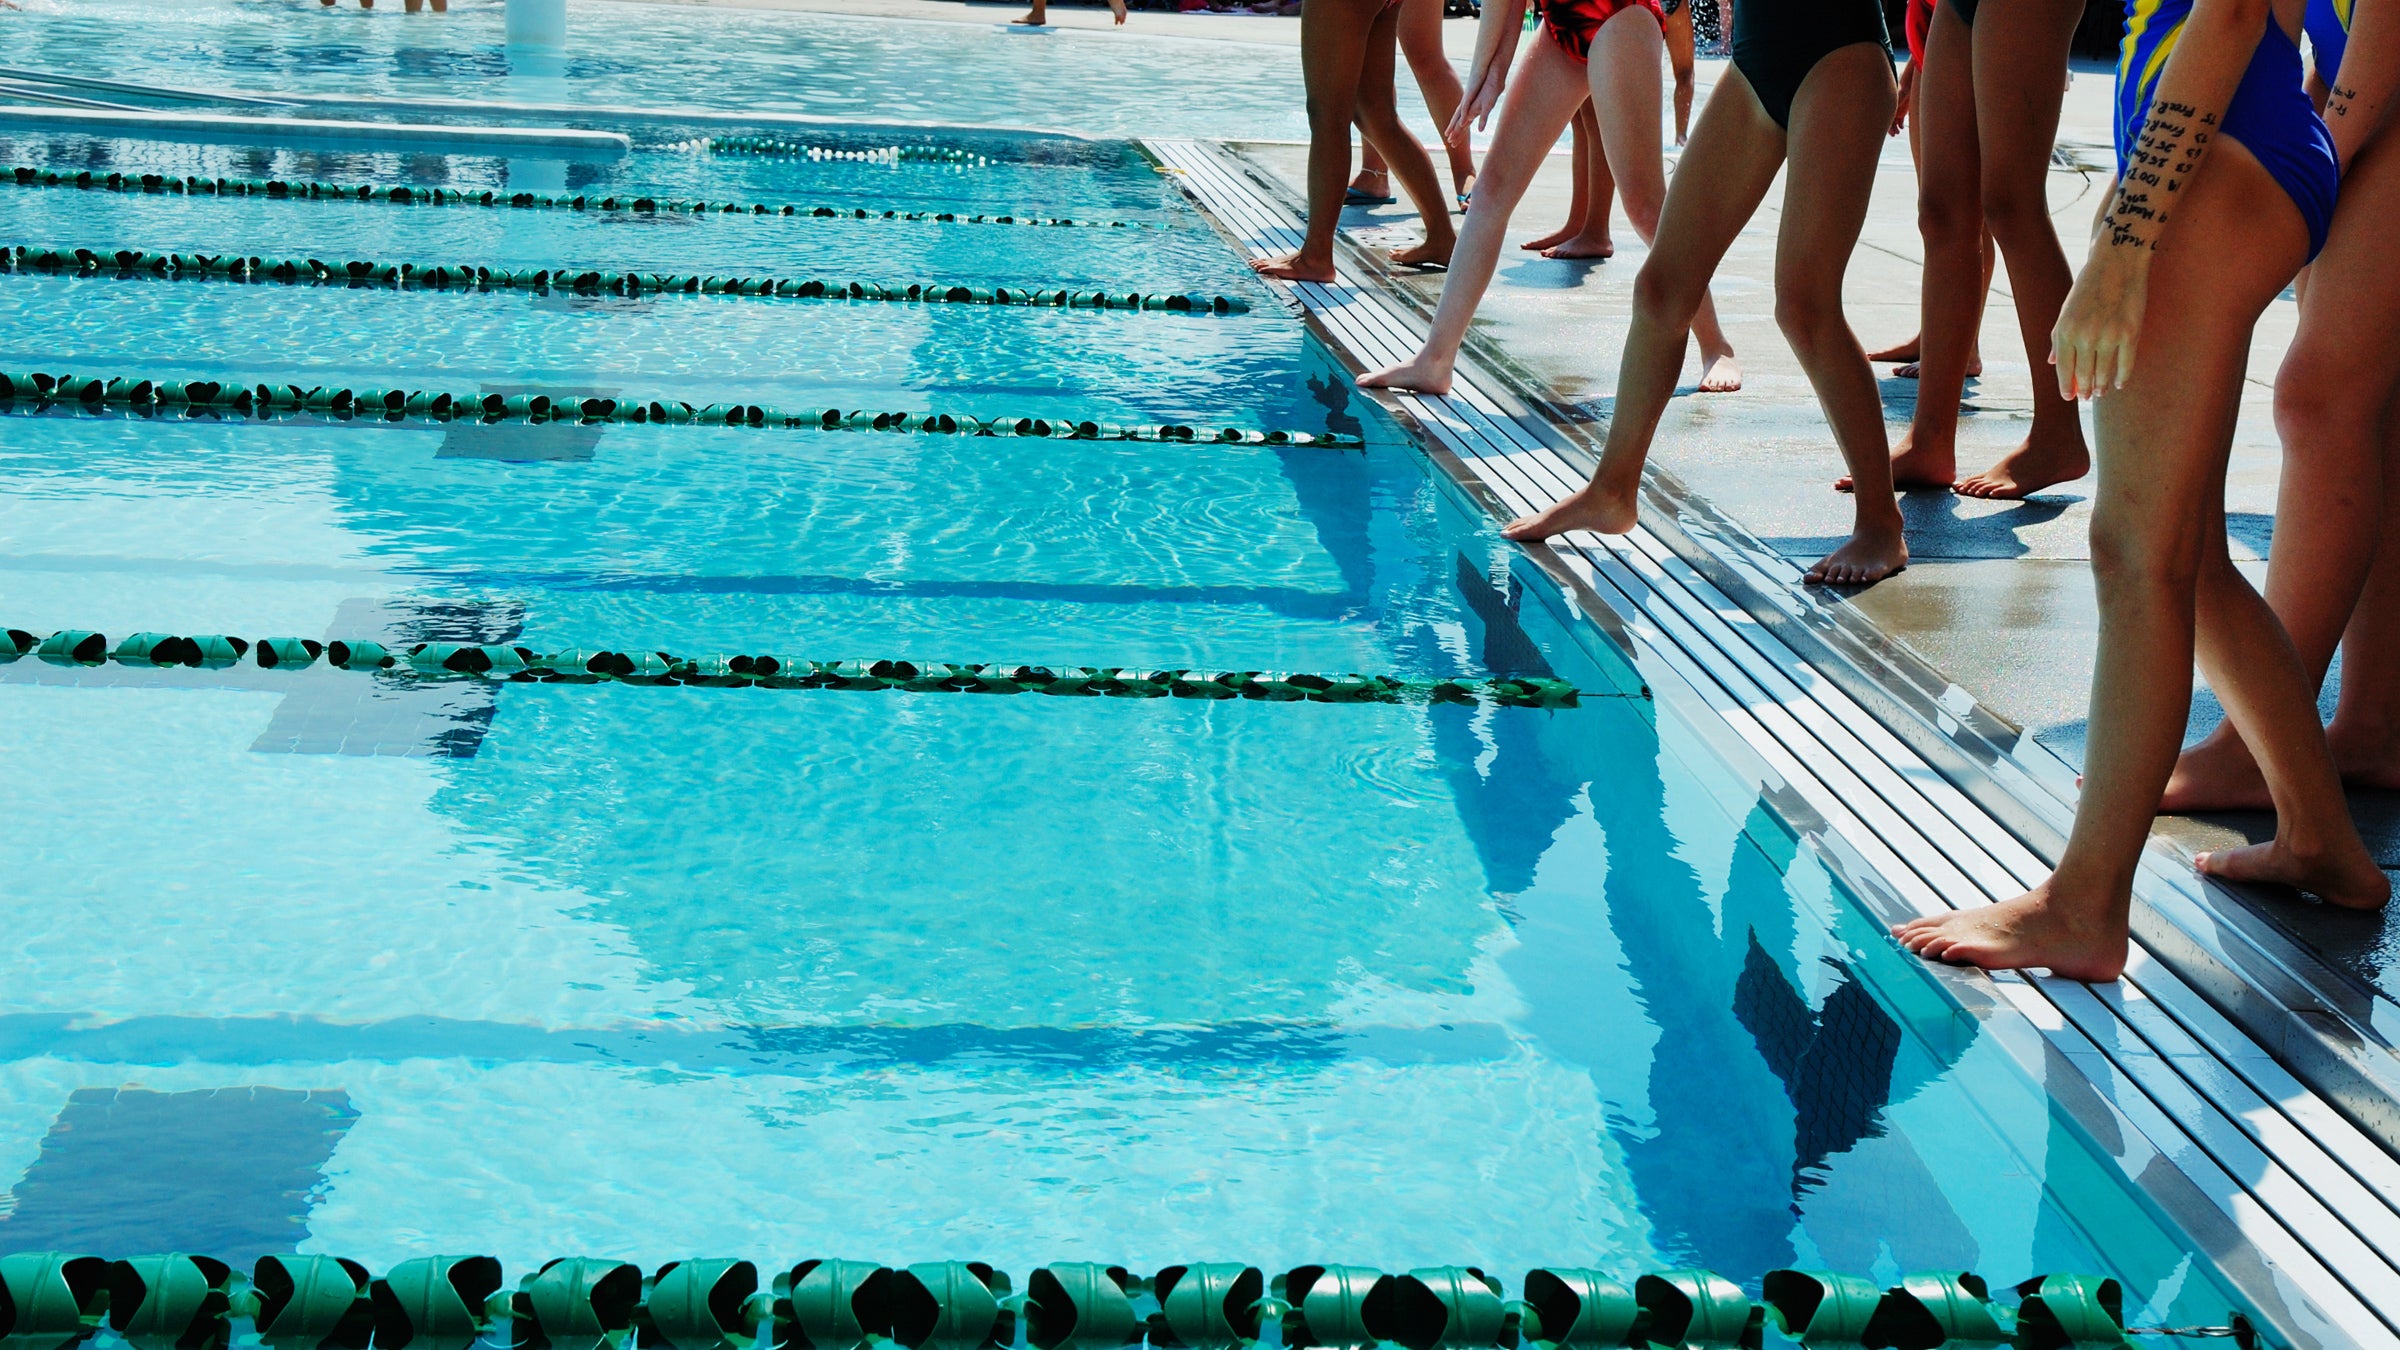 Should USA Swimming Go Down?